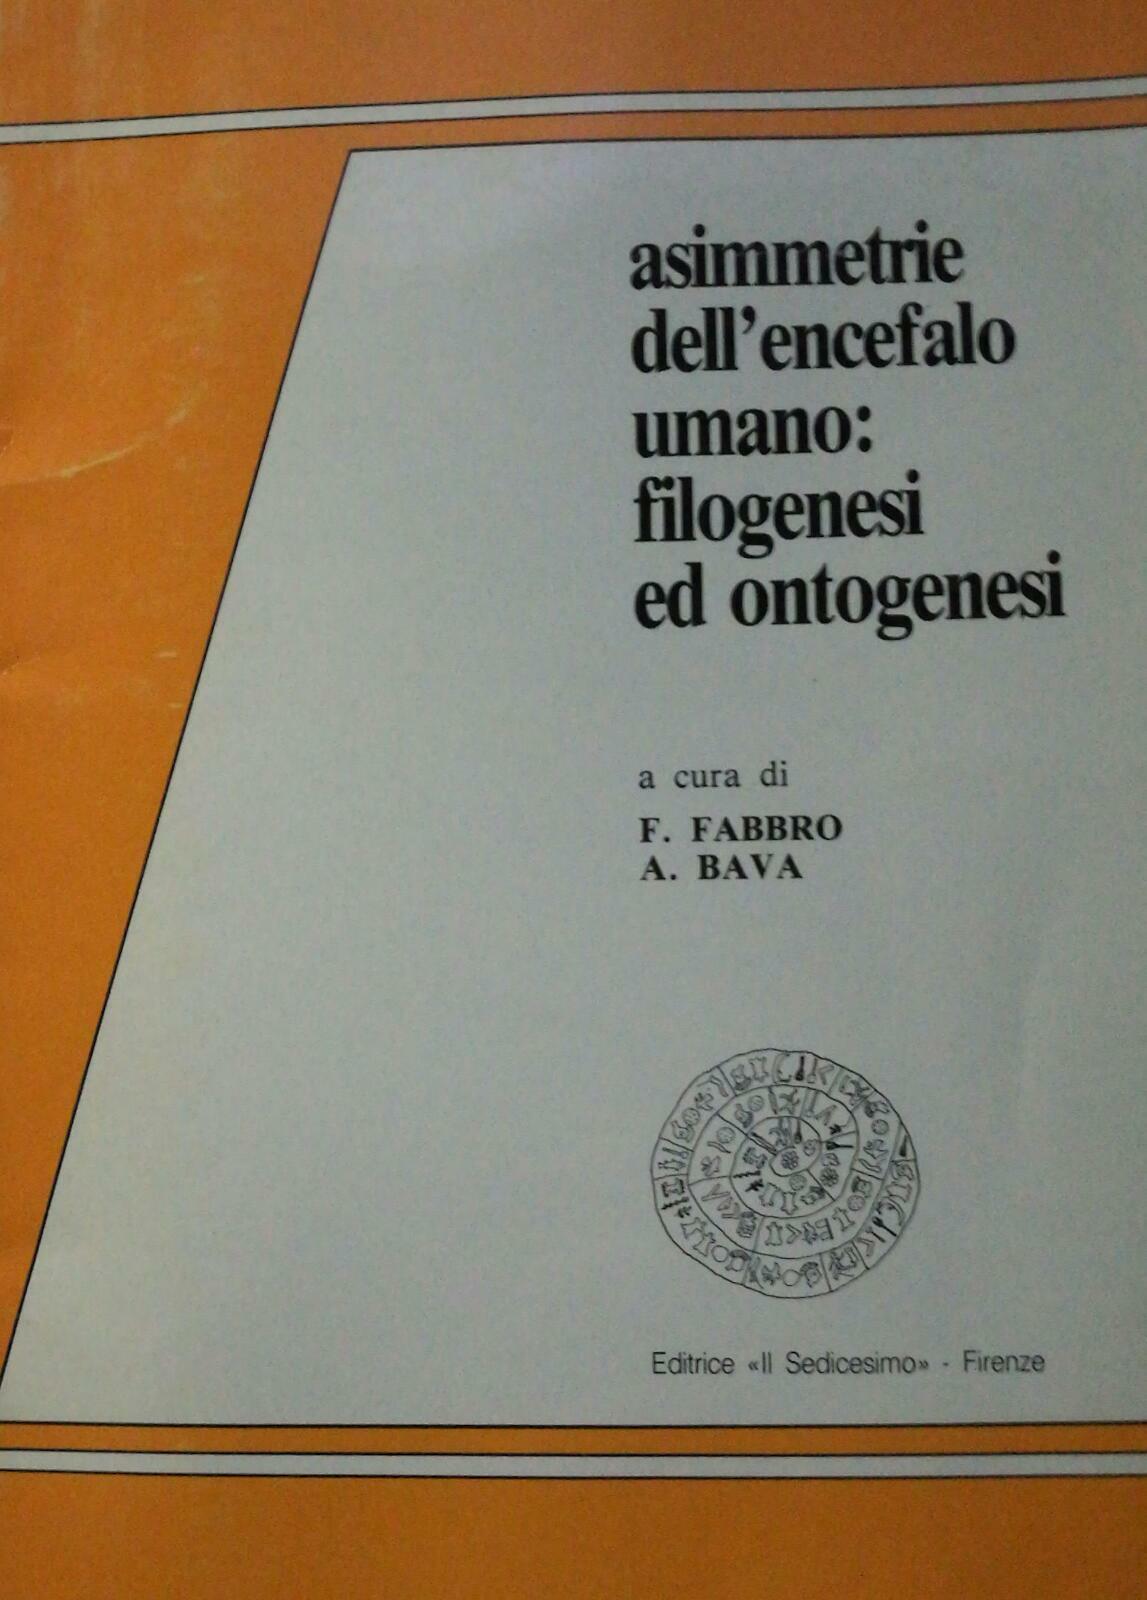 Asimmetrie delL'encefalo umano: Filogenesi ed Ontogenesi  di Fabbro - Bava,  199